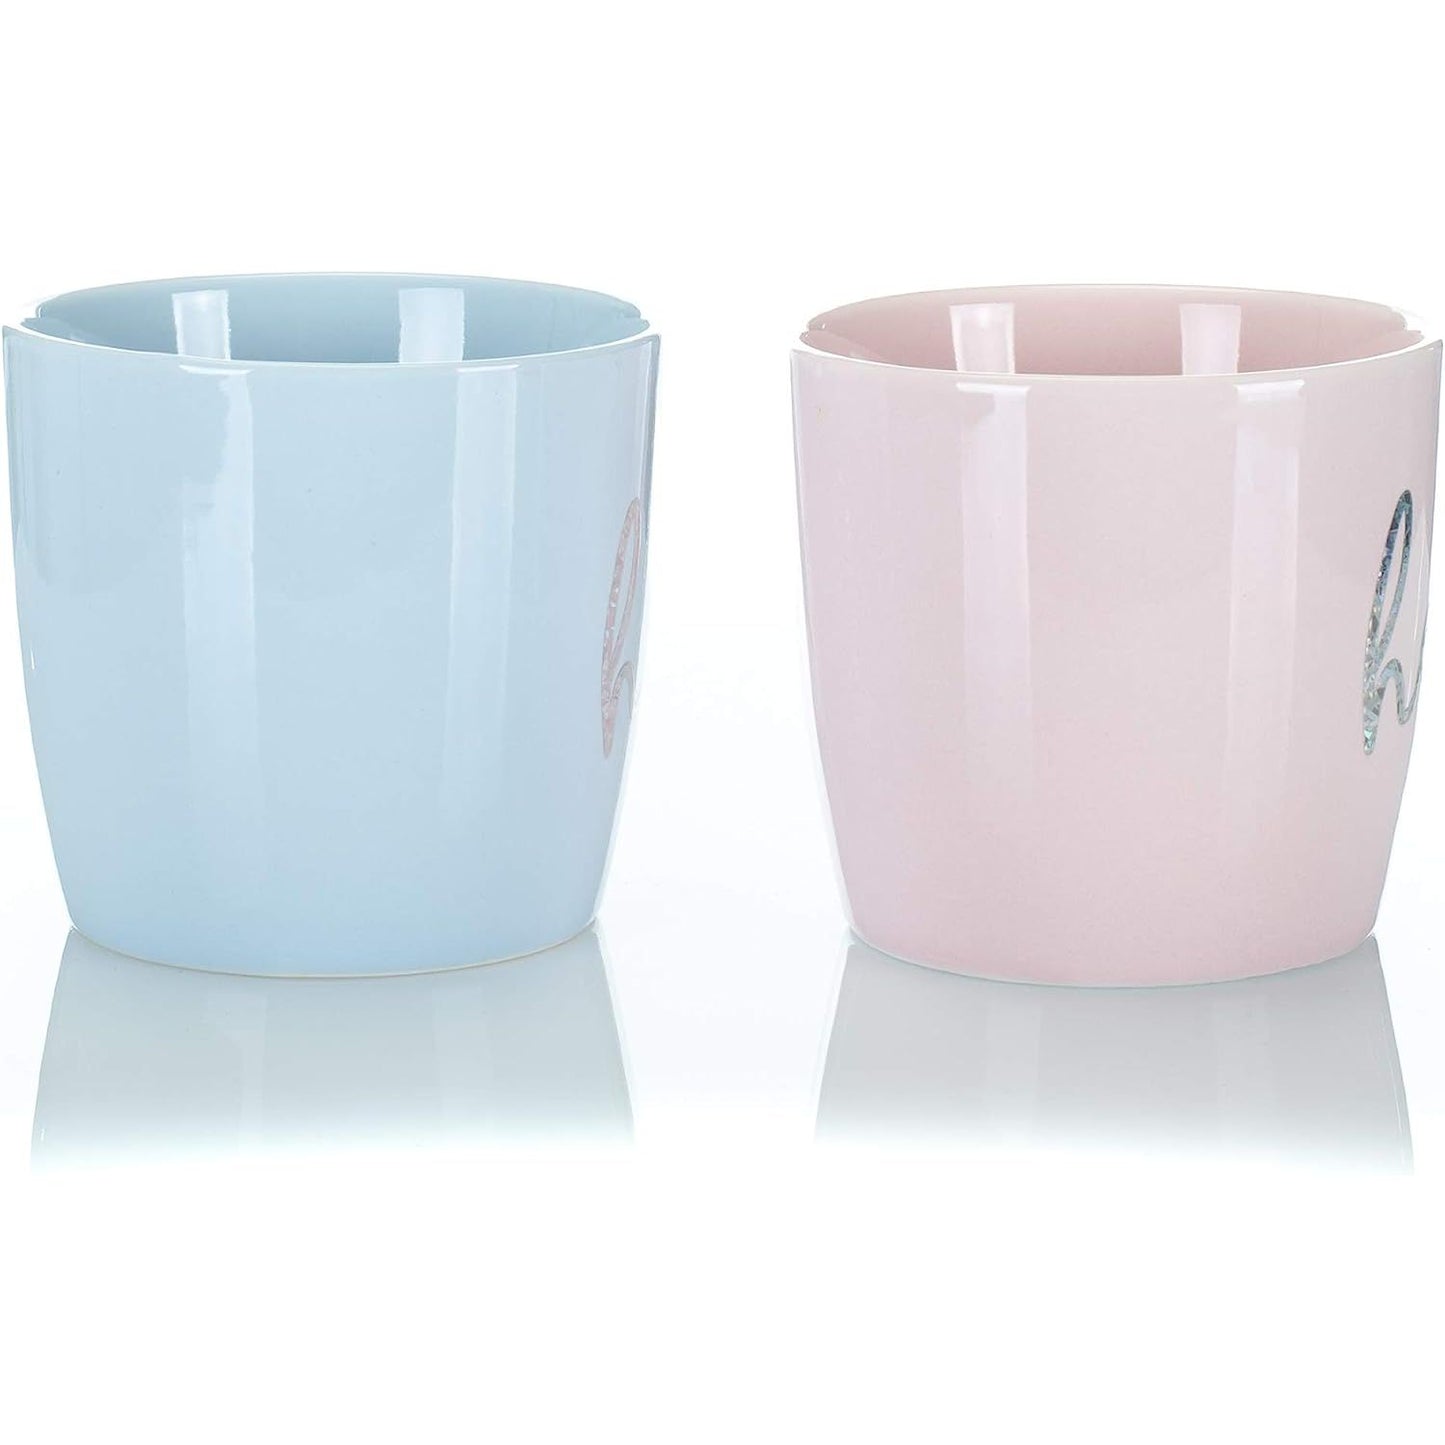 'His and Hers' Blue & Pink Ceramic Mug Set